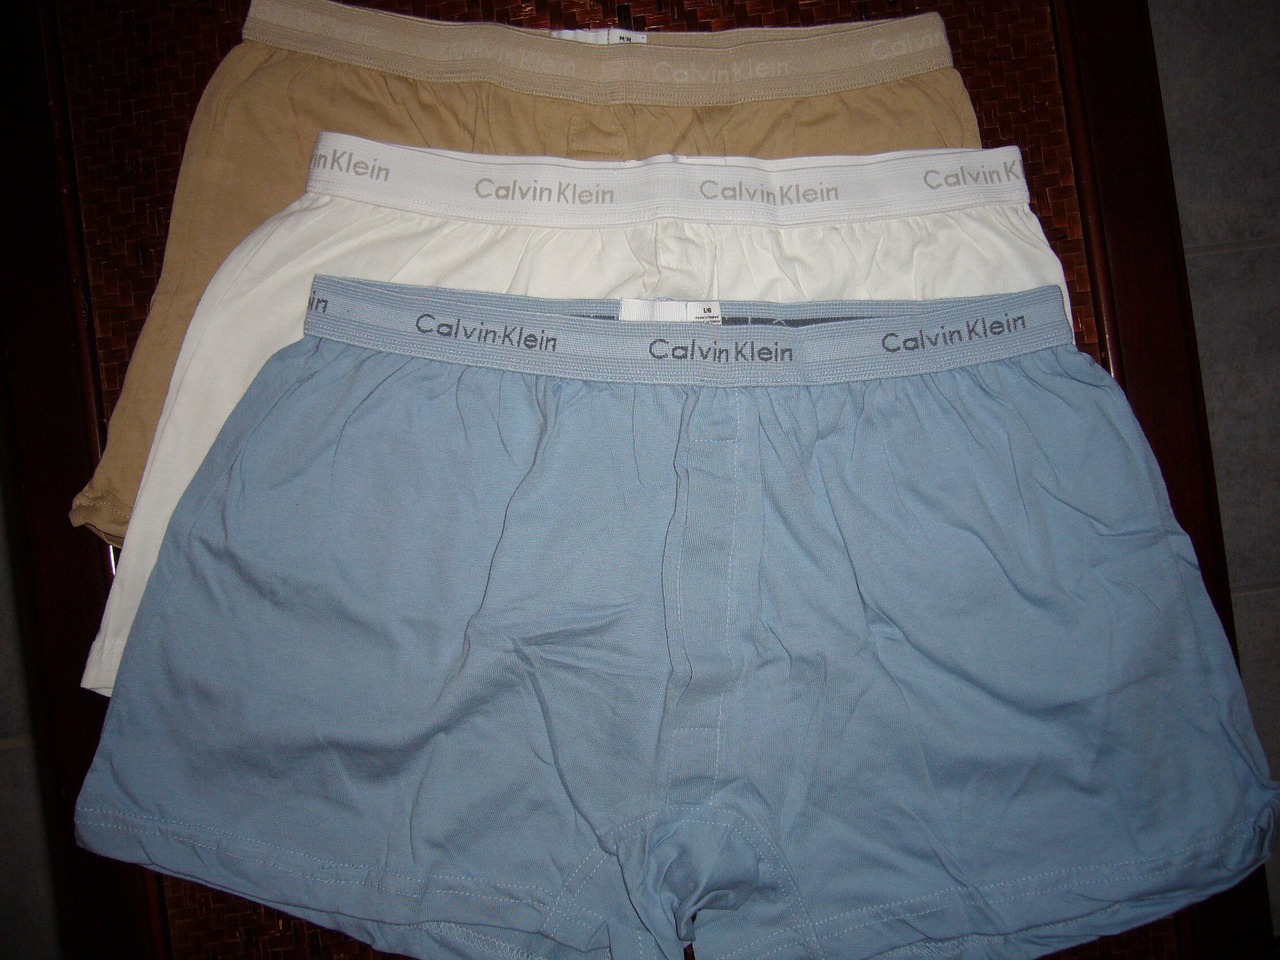 boxer shorts boxers underpants free photo